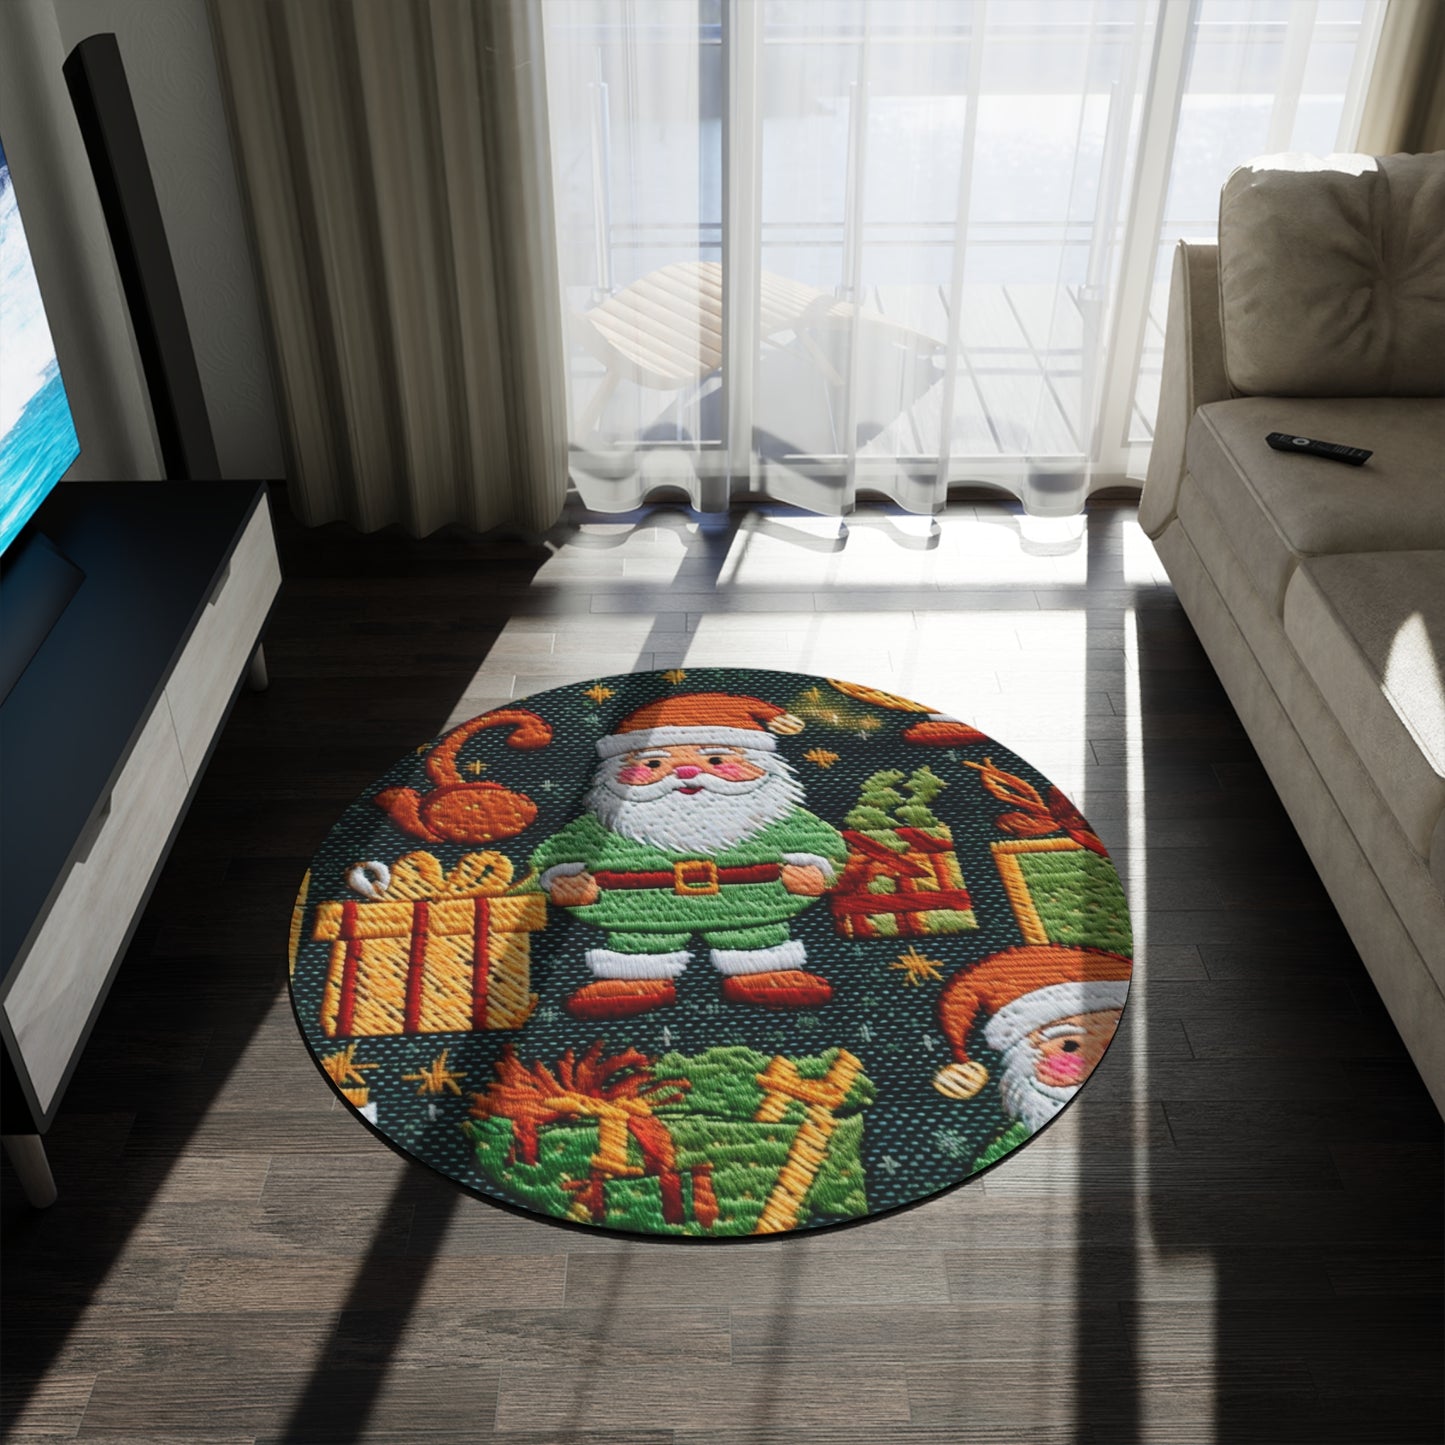 Christmas Santa Claus - Embroidered Presents - Festive Winter Wonderland - Deck the Halls Design - Round Rug